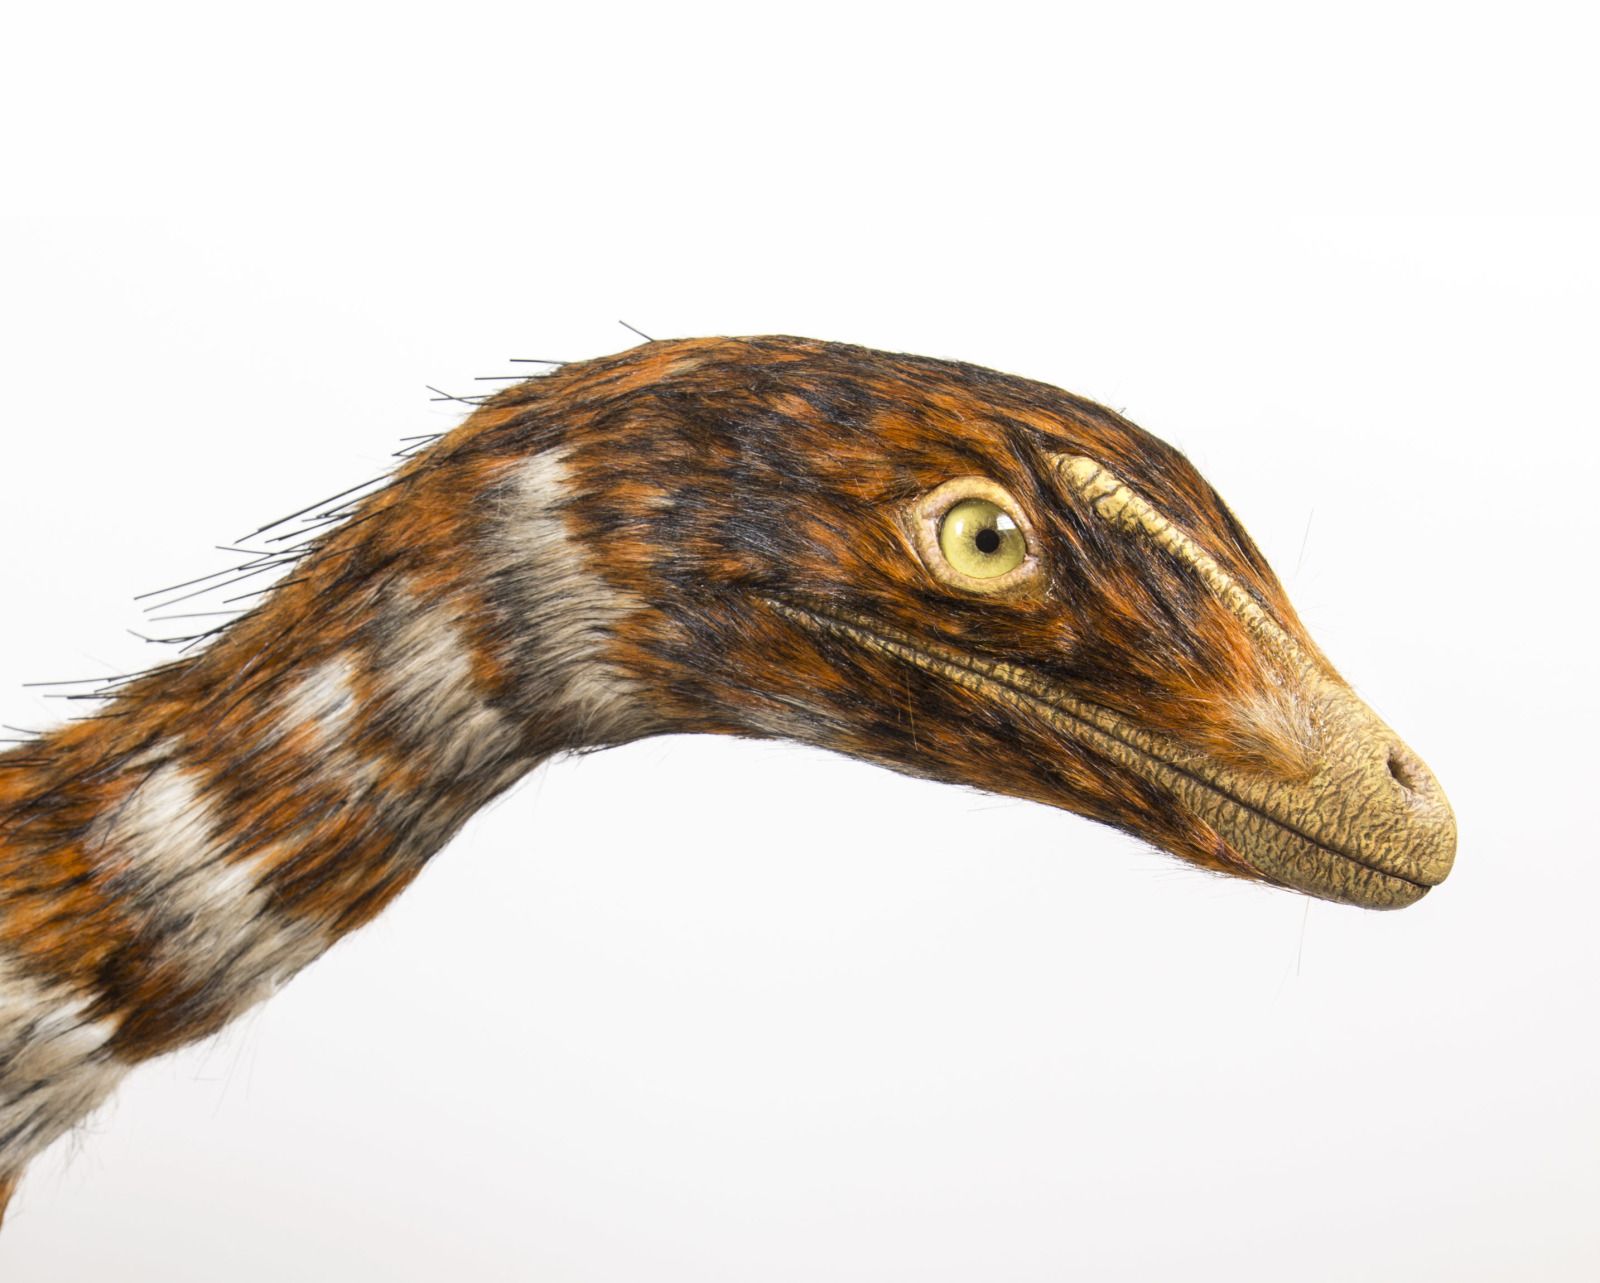 The head of the dinosaur model